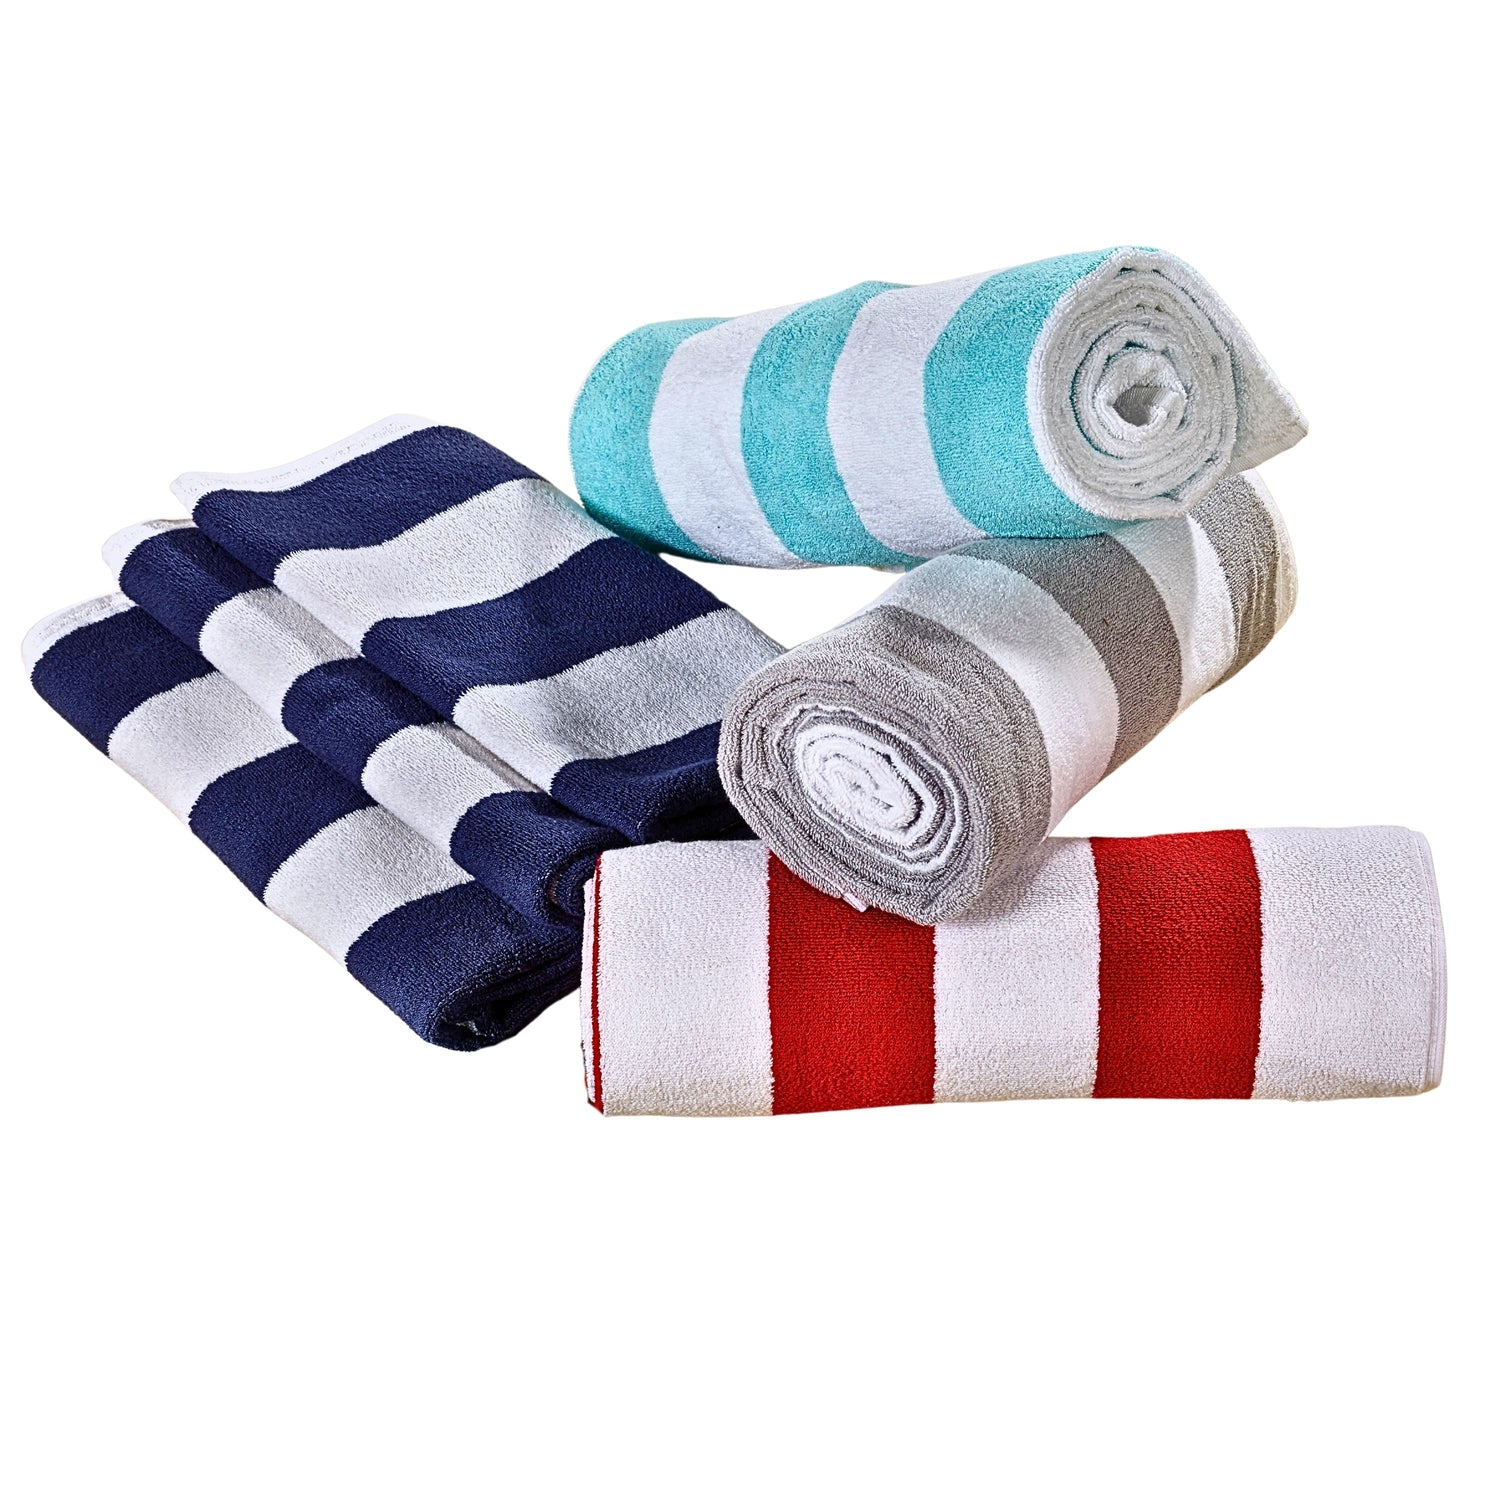 BUY BEACH TOWELS IN BULK  Bulk Beach Towels Stock Up on Premium Quality Bulk Beach Towels for Unbeatable Savings.